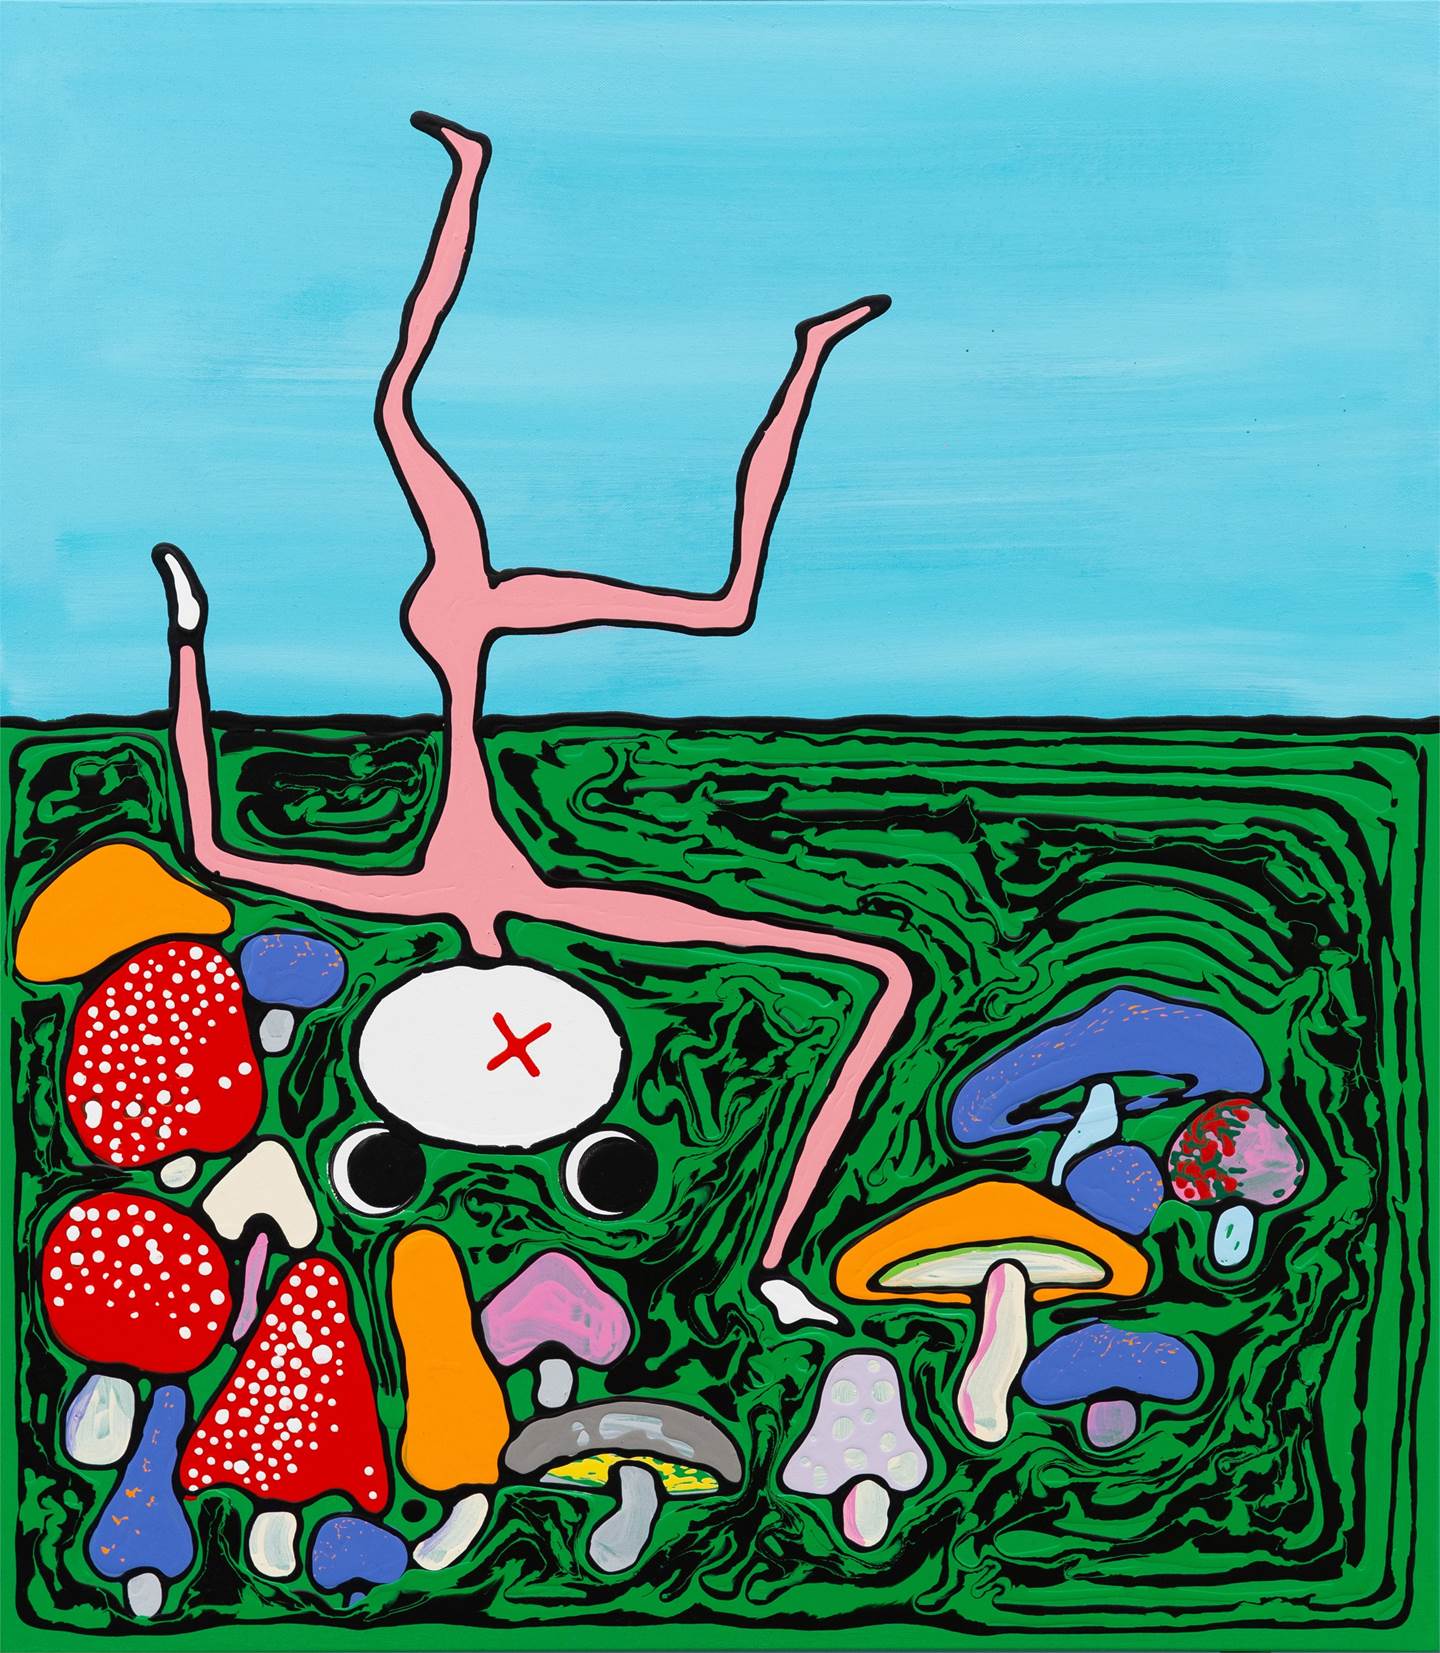 Dance with the mushrooms #2, original   Painting by Mario Louro